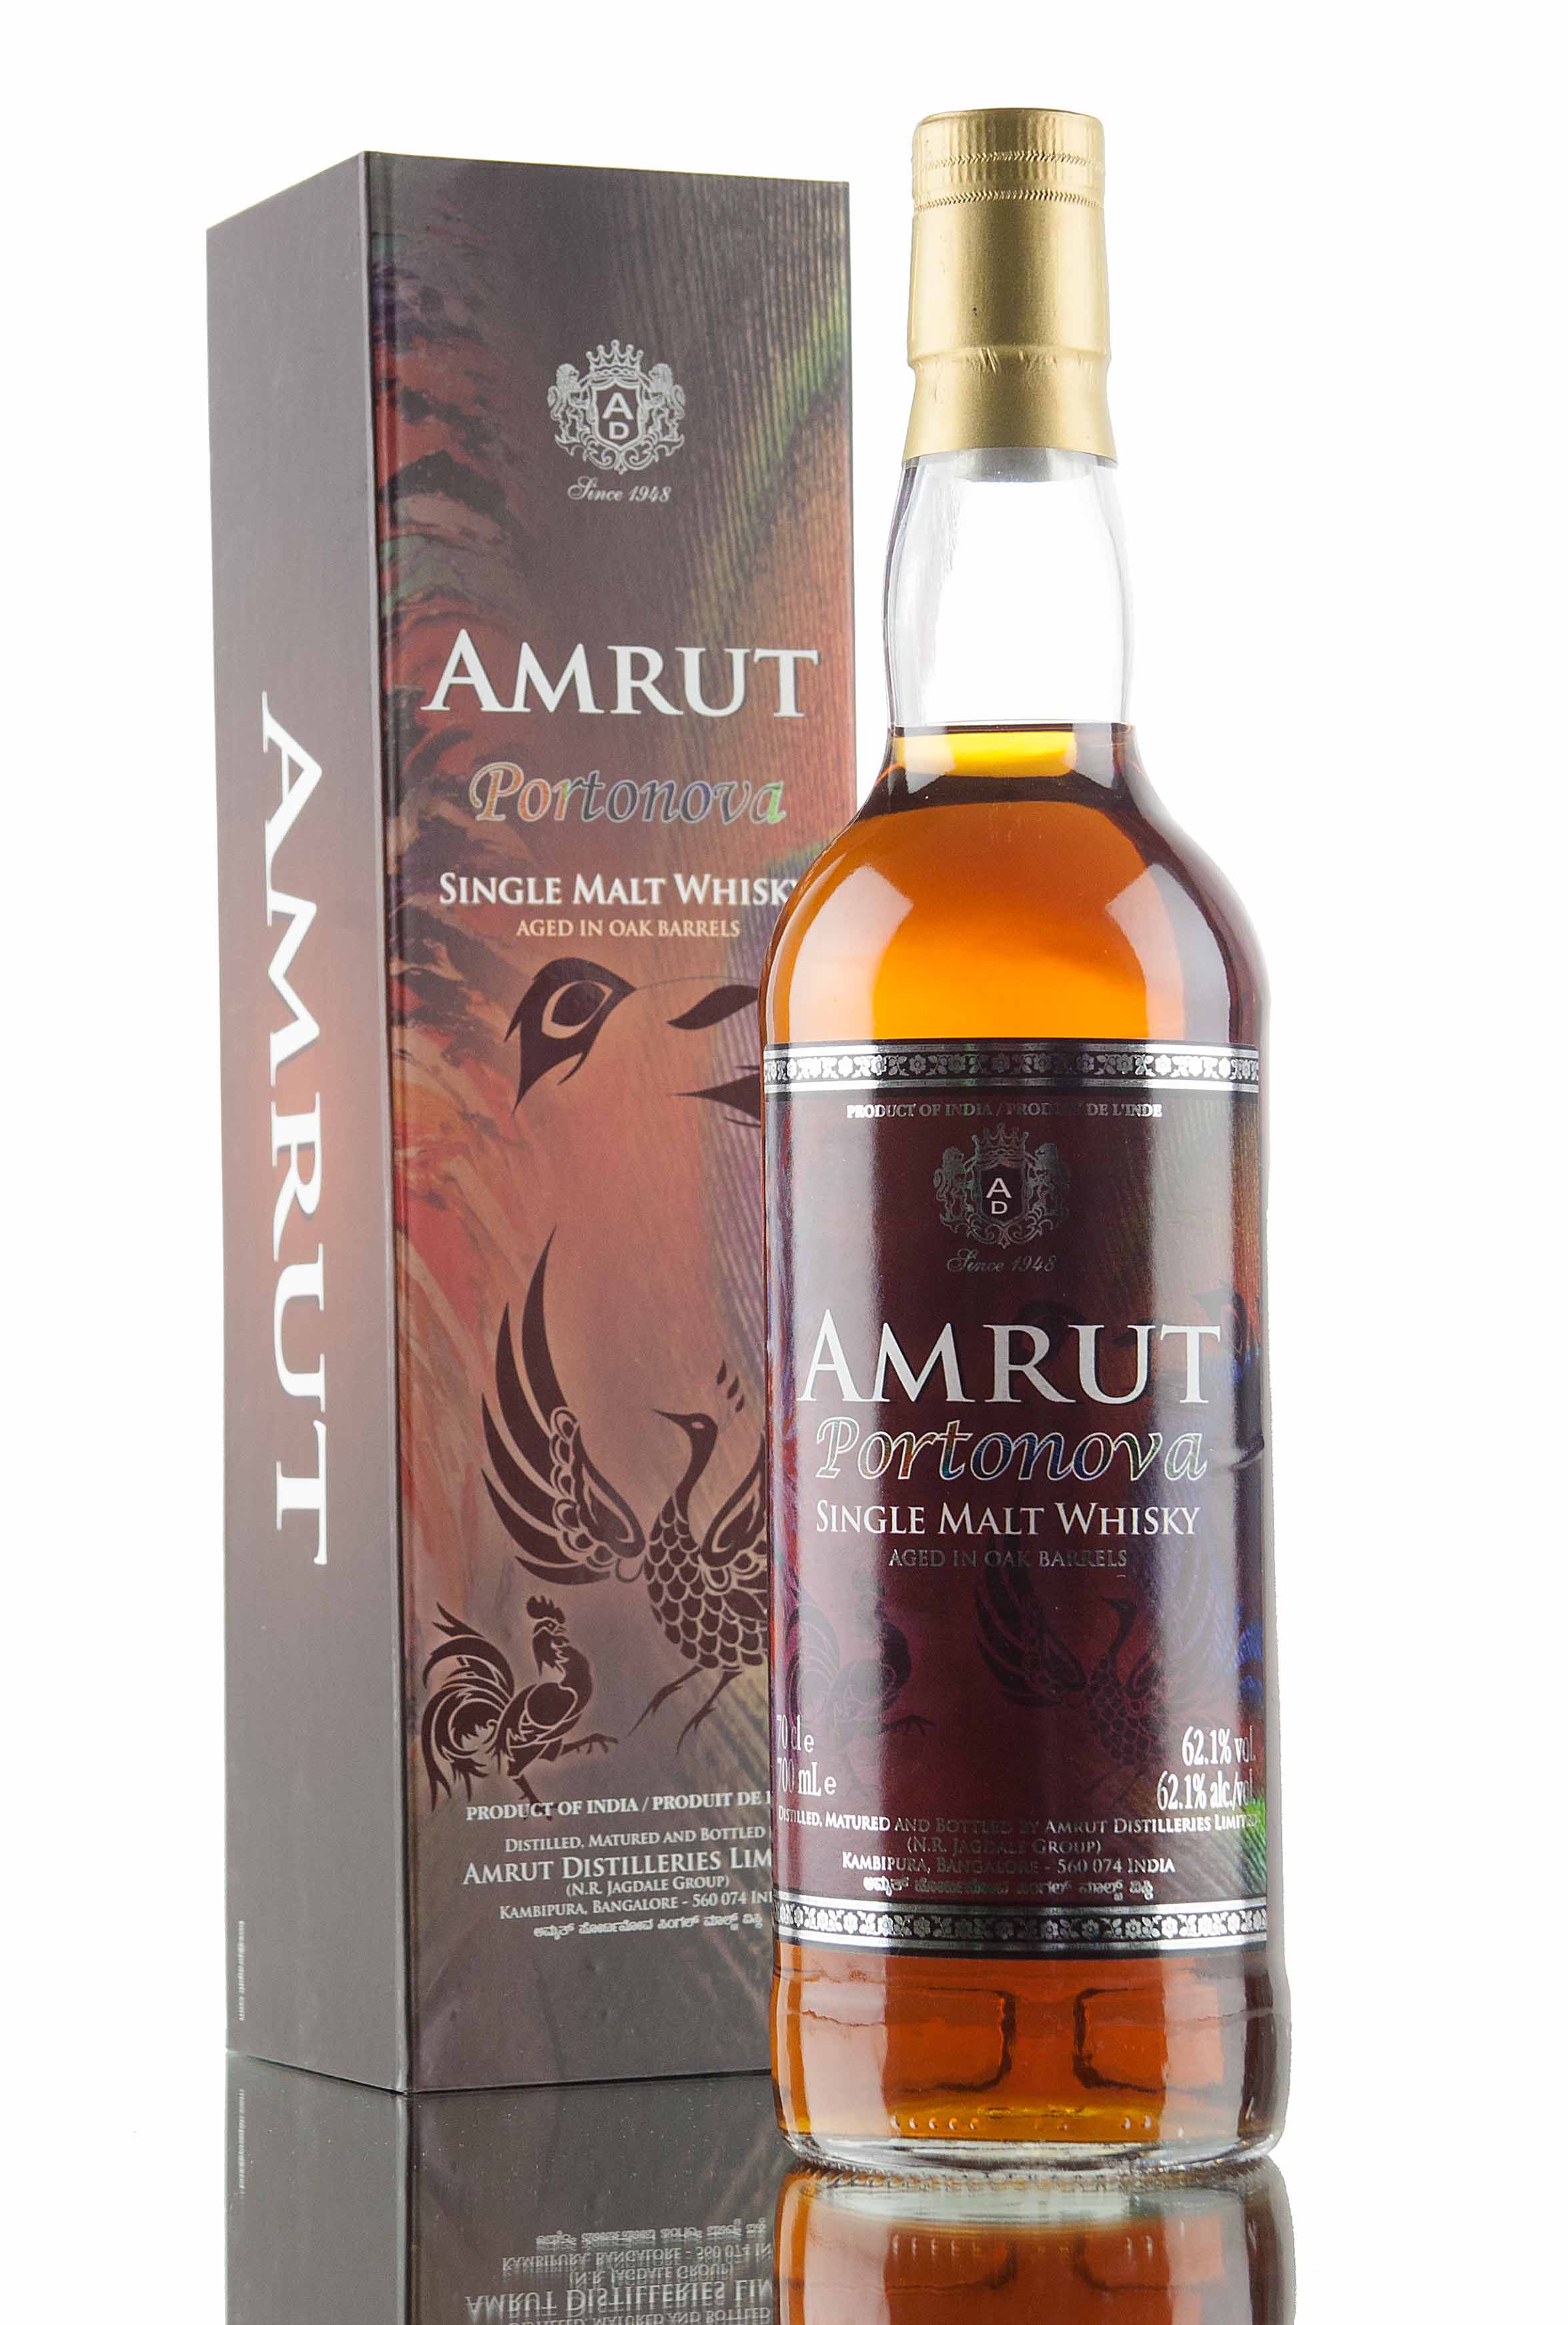 Amrut Portonova / Indian Single Malt Whisky